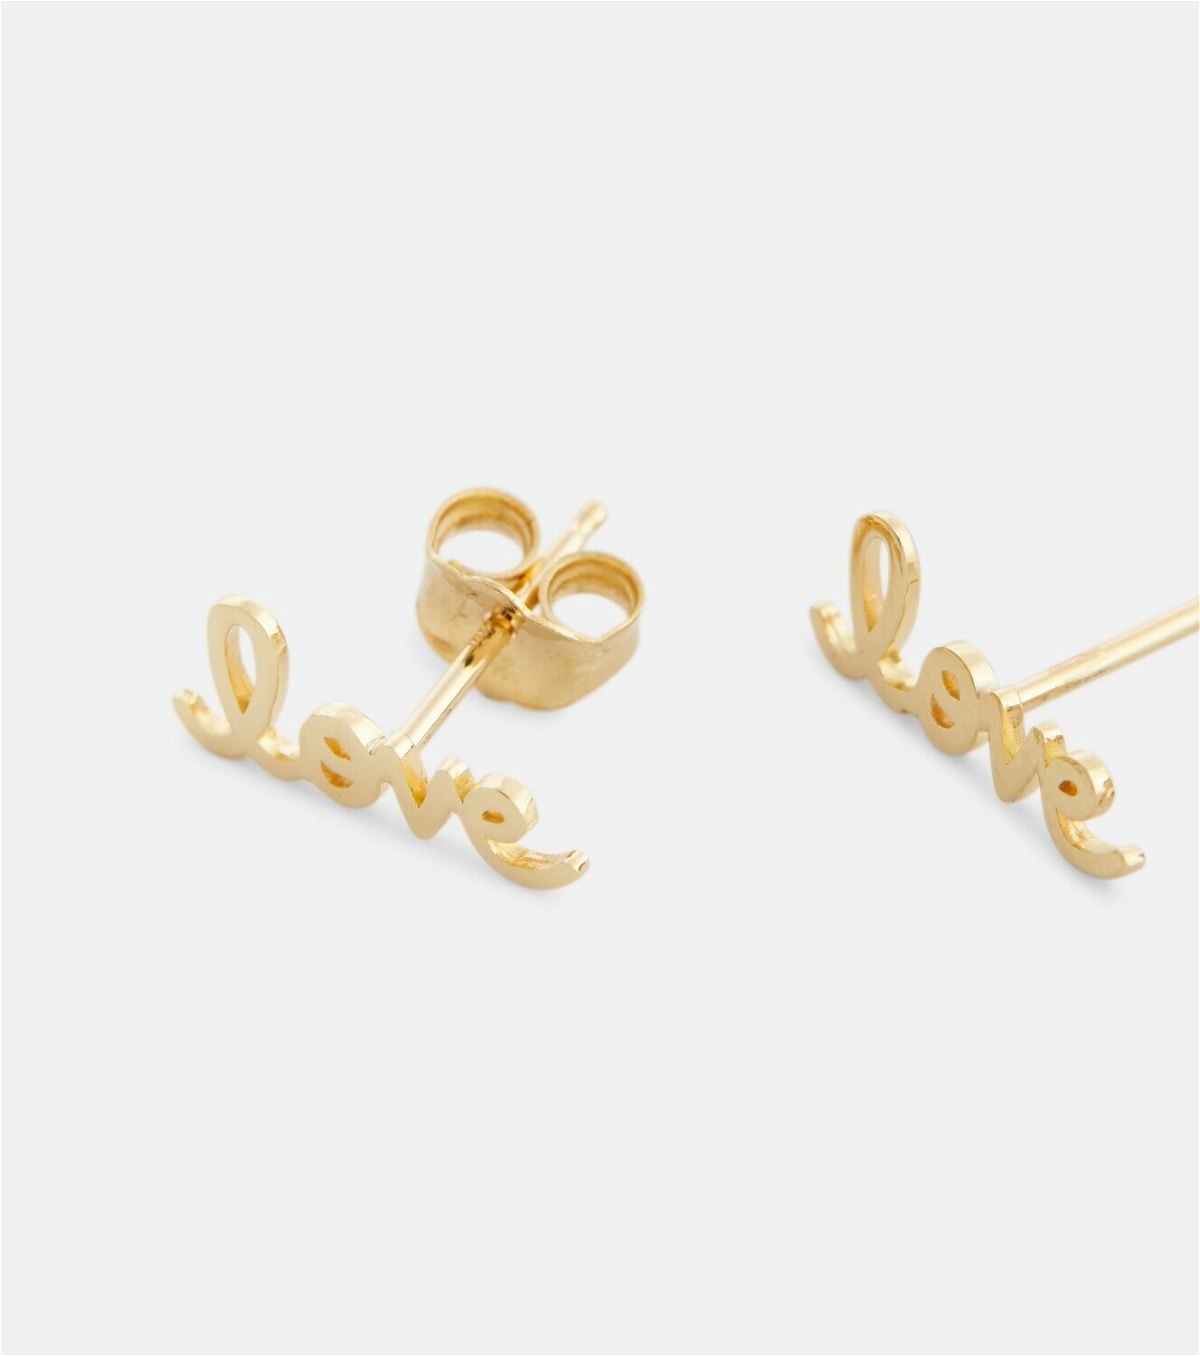 Sydney Evan Love 14kt gold stud earrings